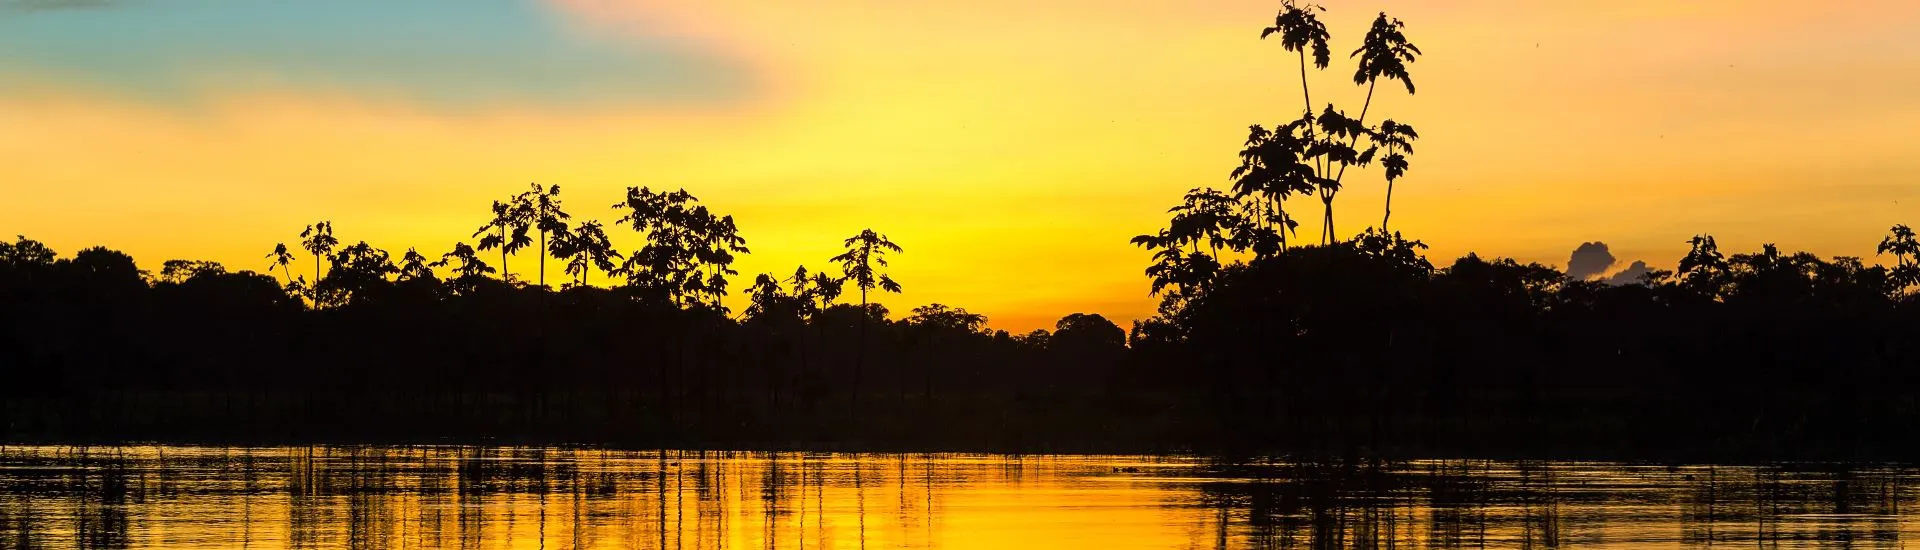 Sunrise over the Amazon River, Iquitos